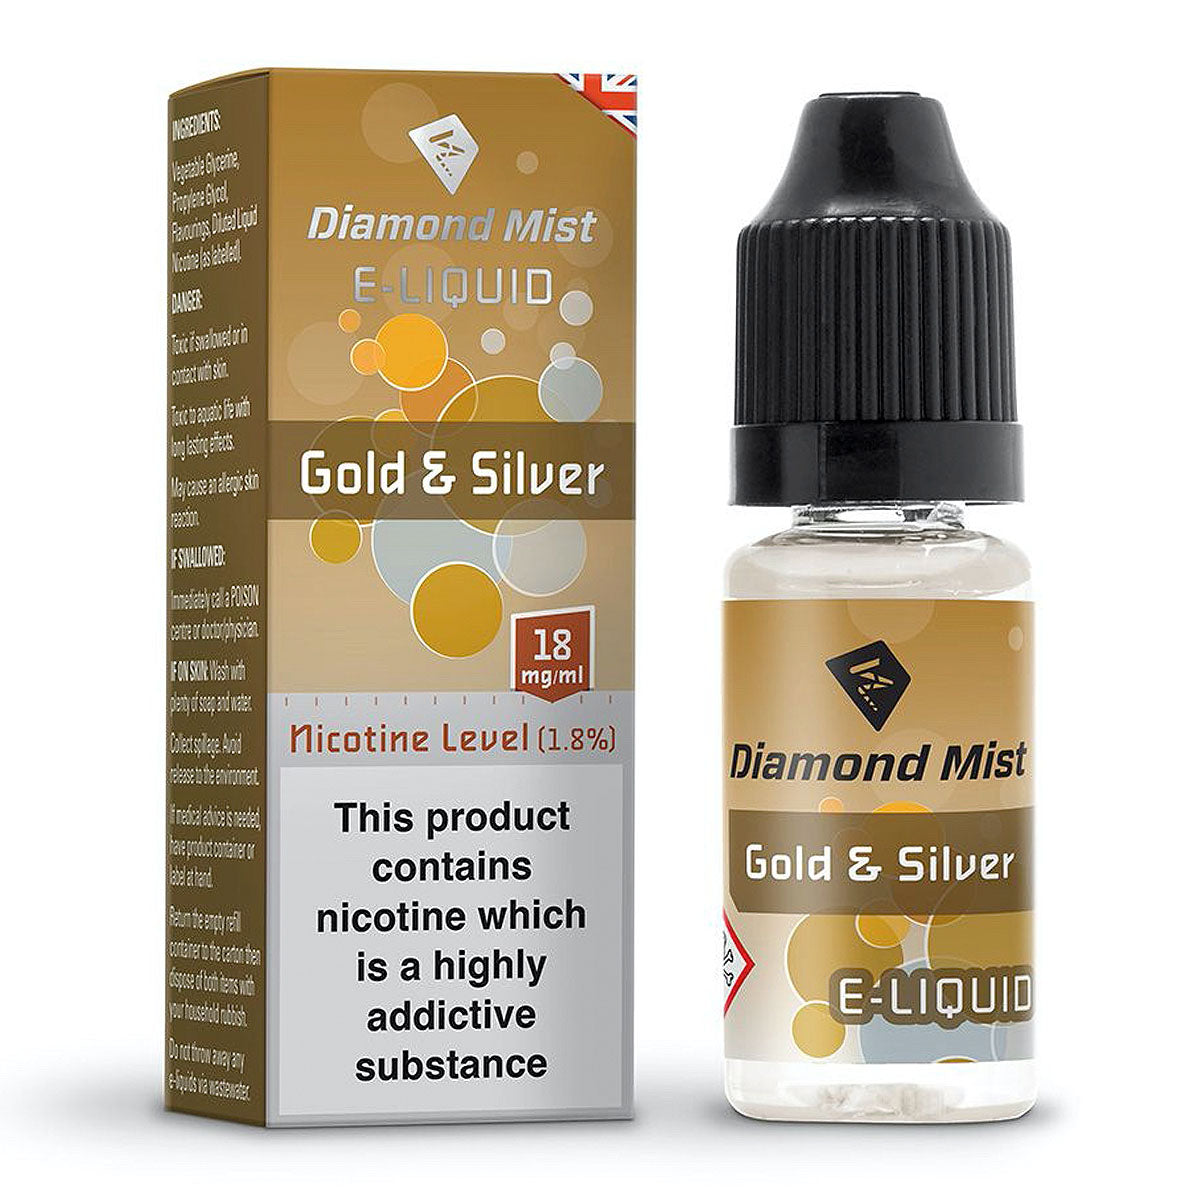 Gold & Silver 10ml by Diamond Mist